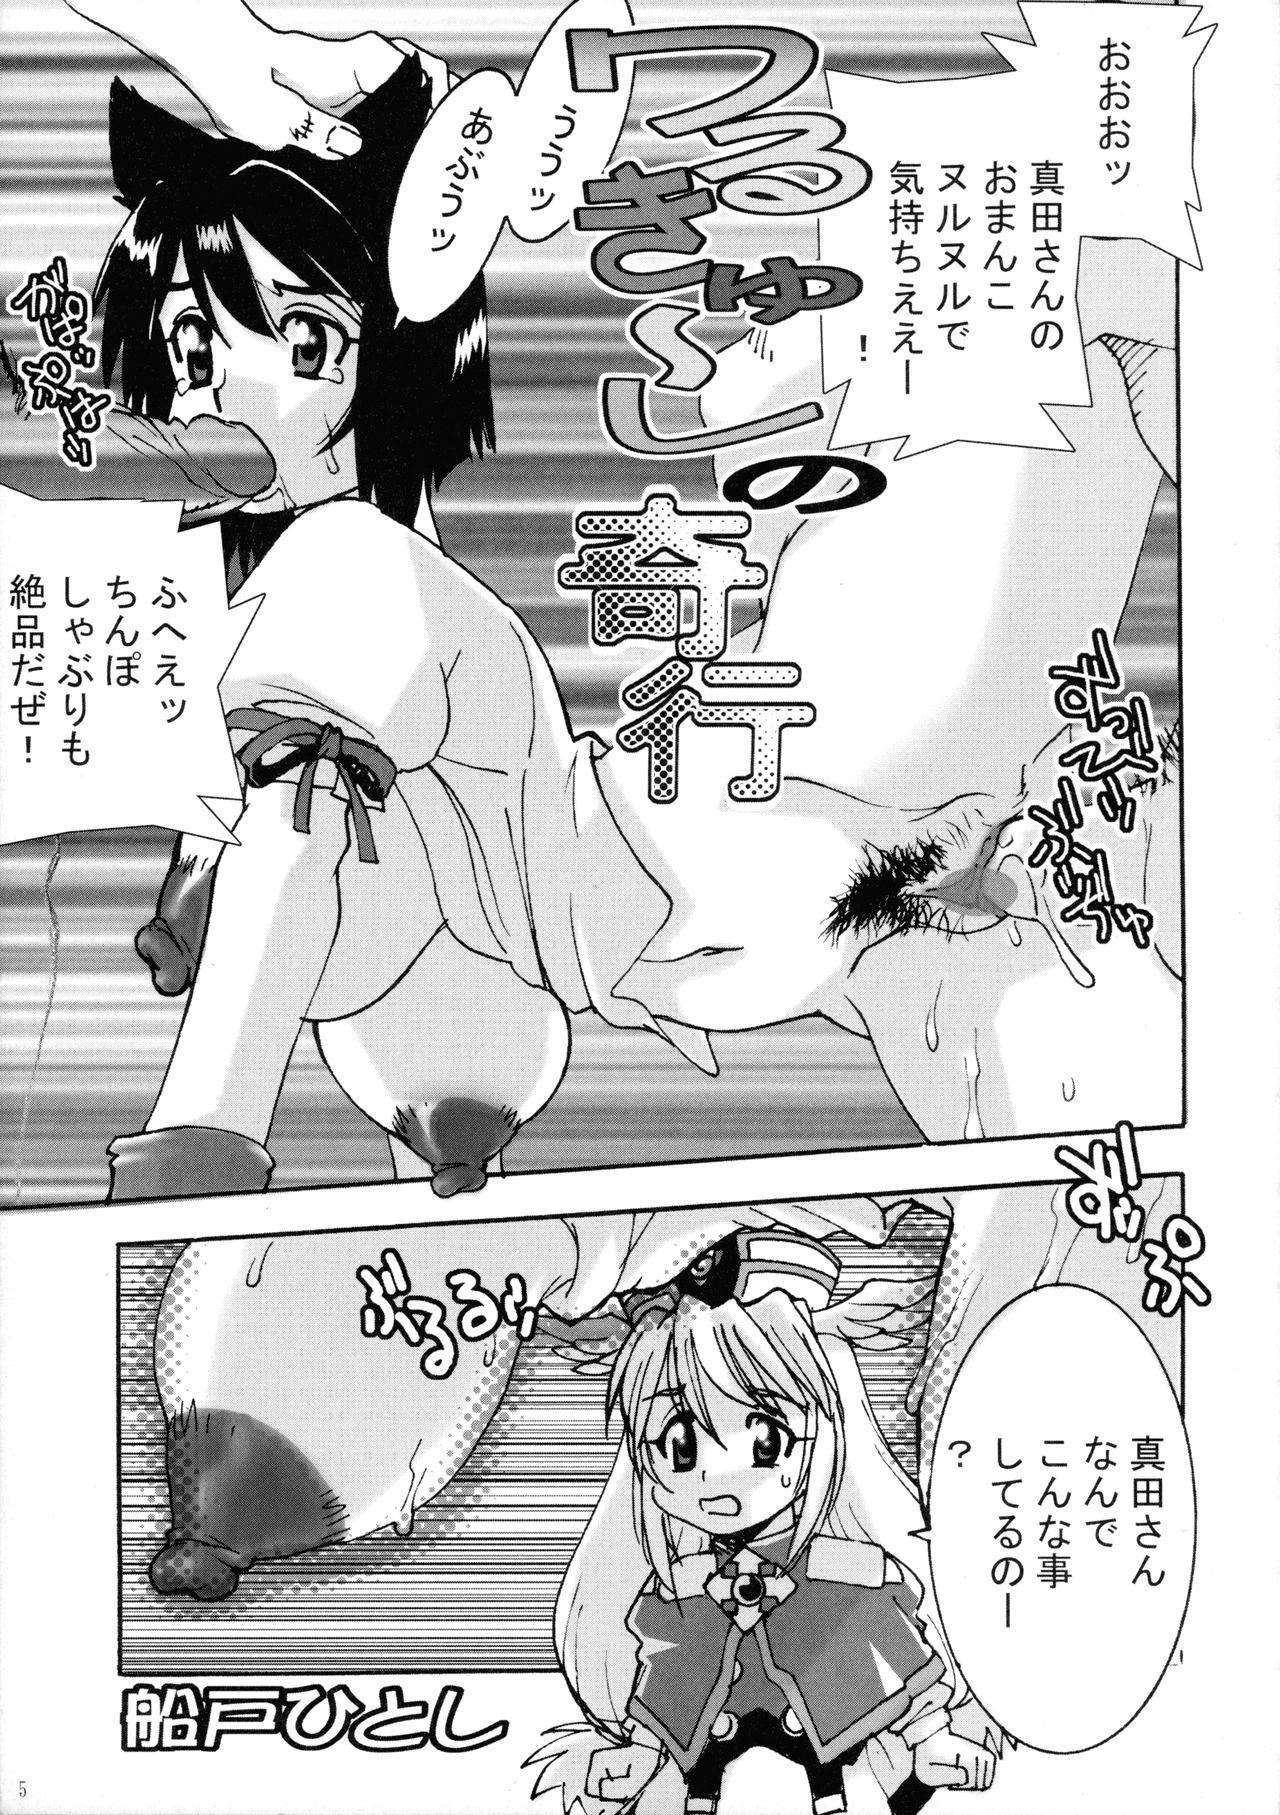 Handjob Shin Hanajuuroku VIII - Naruto One piece Bleach Kochikame Ufo princess valkyrie Bubble - Page 5